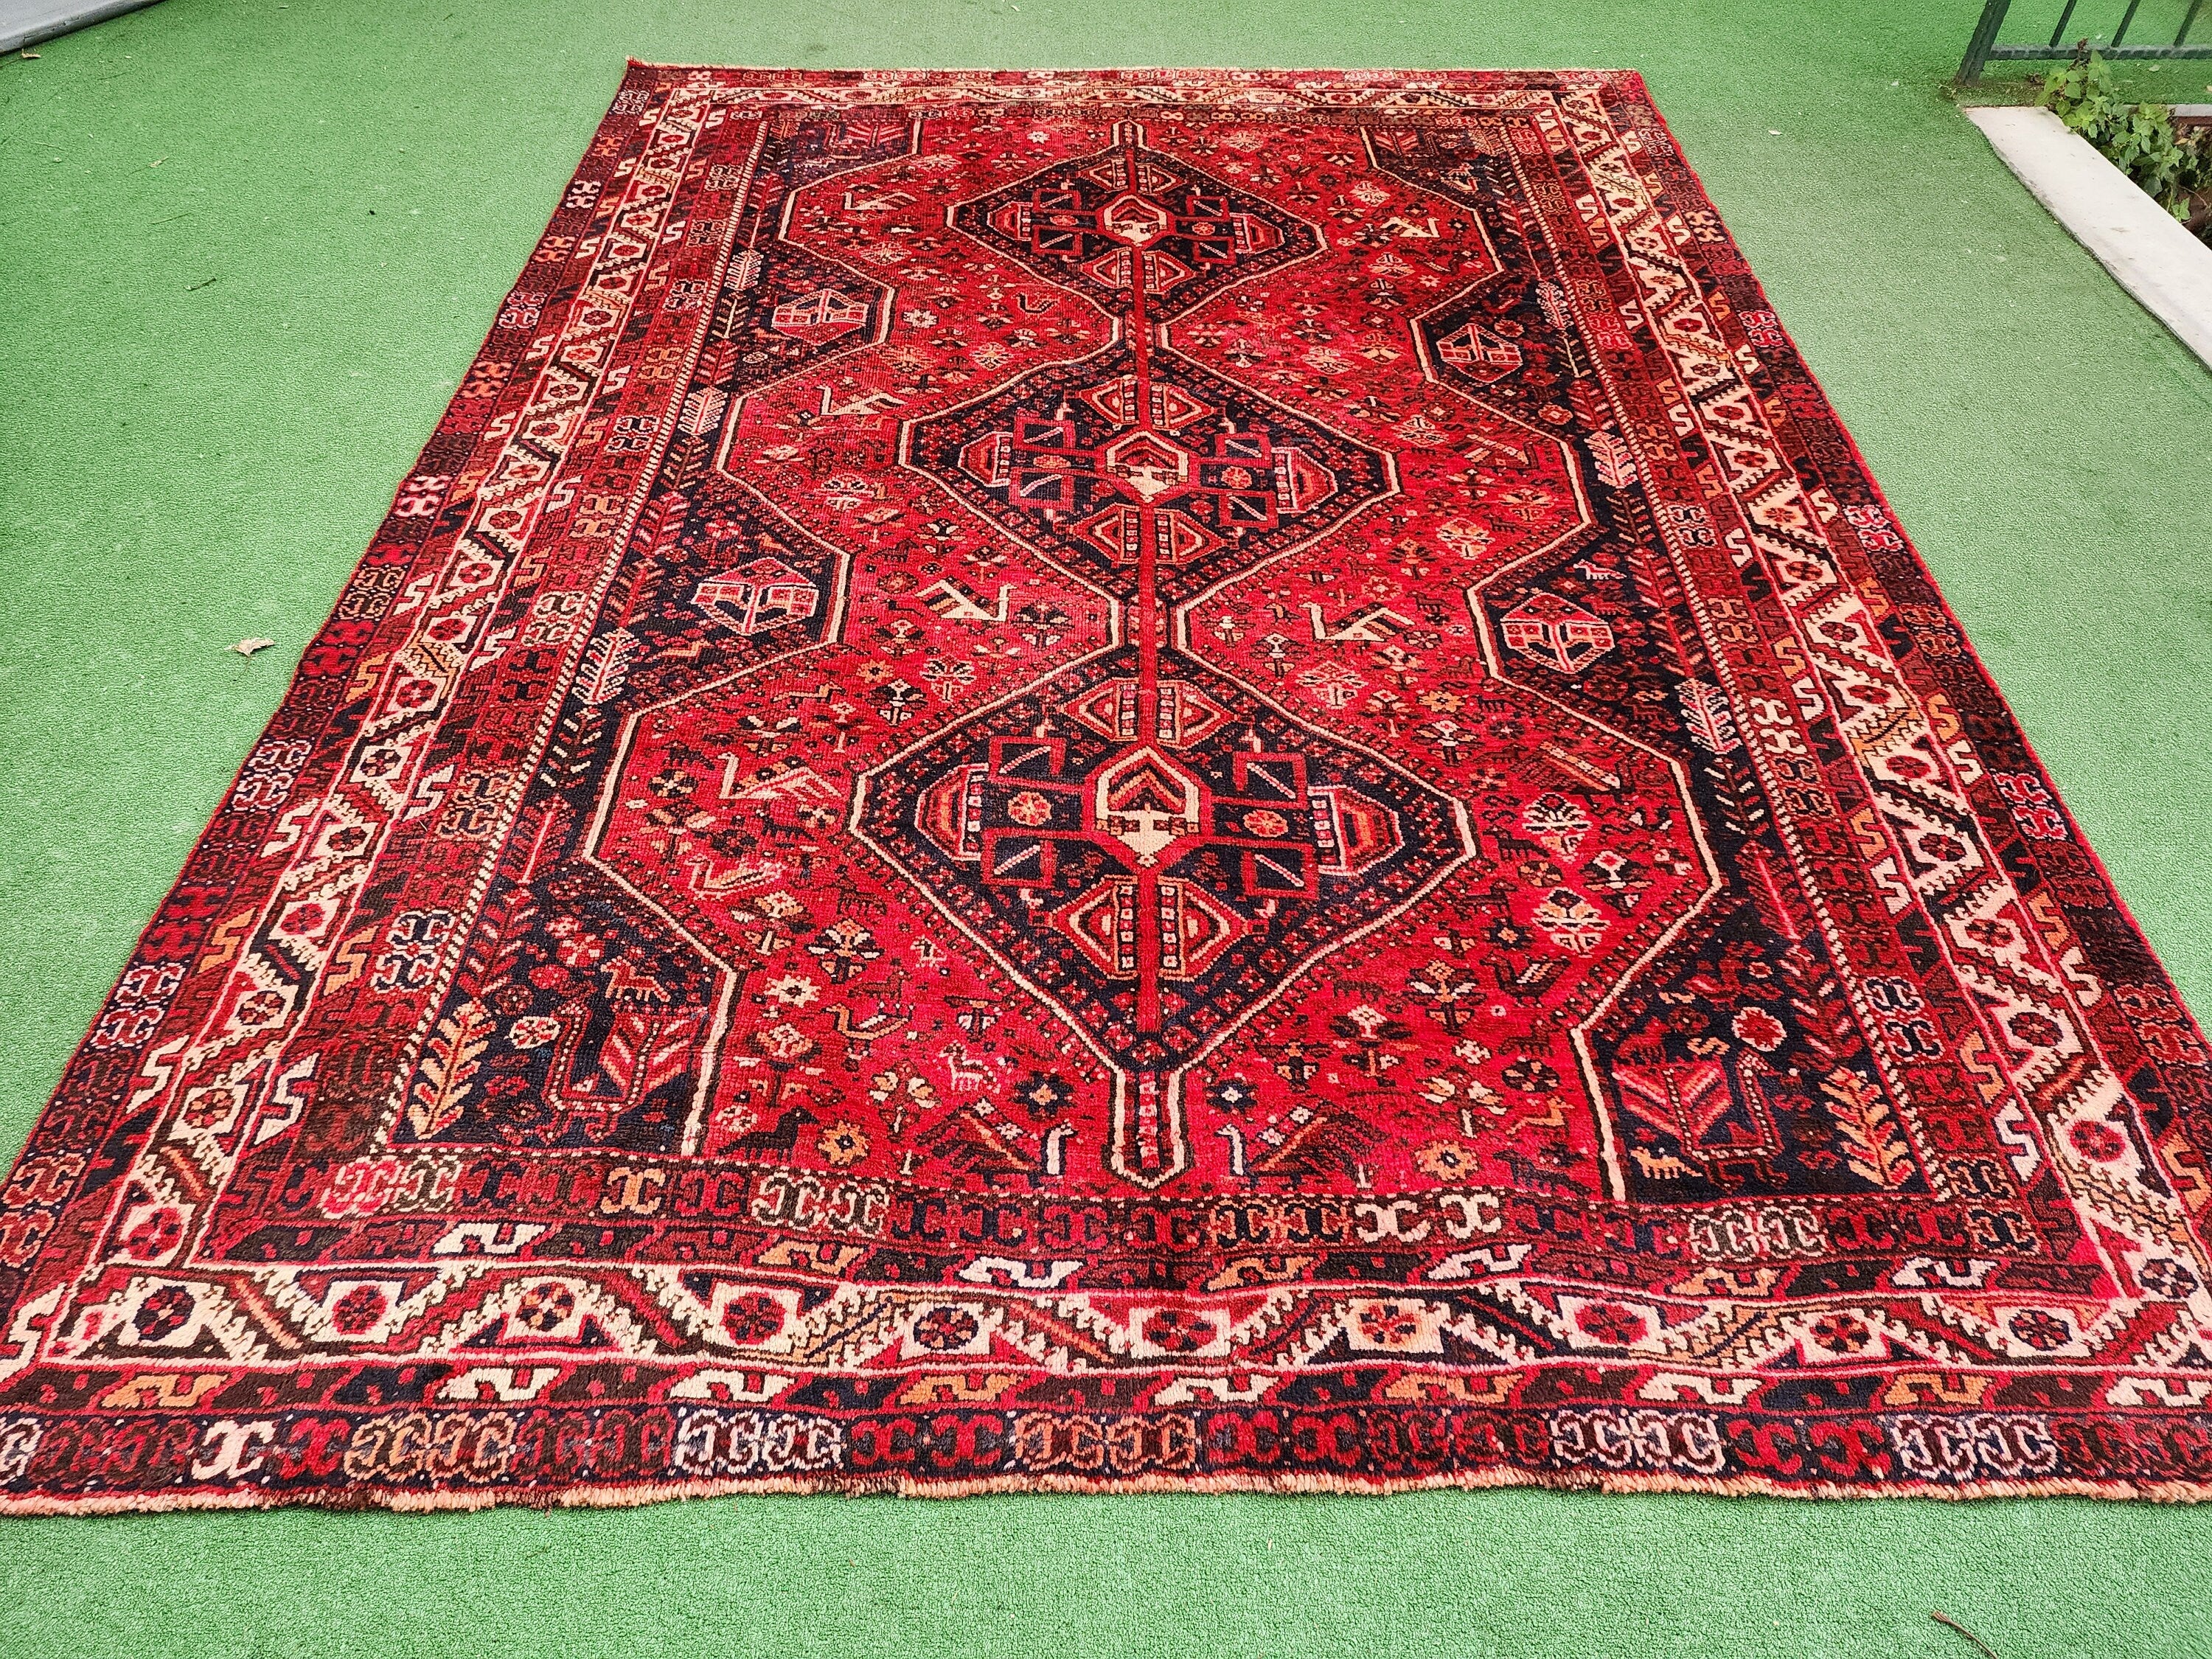 Red and Blue Persian Area Rug, Vintage Turkish Tribal Organic Wool Rug, Recycled Oriental Design Rustic Floor Rug, Carpet, 9'8'' x 7'2'' ft